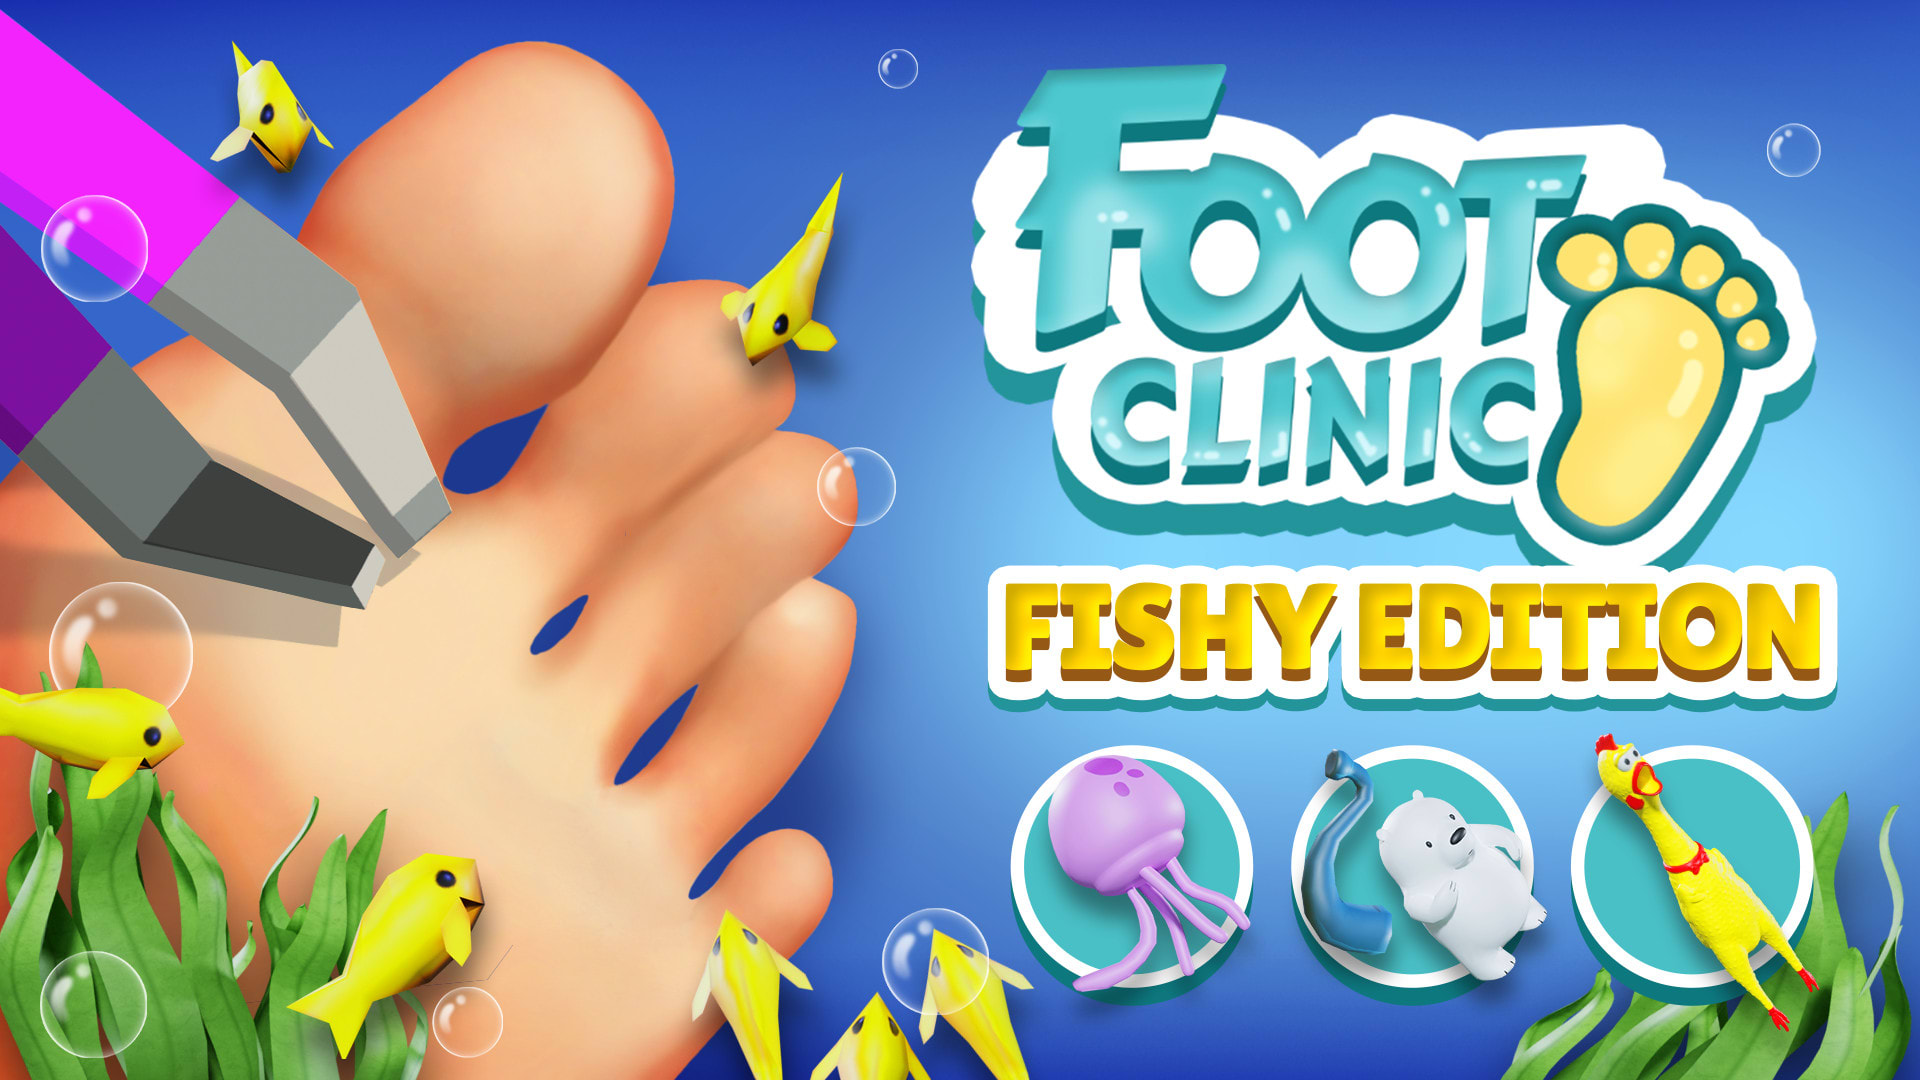 Foot Clinic: Fishy Edition 1